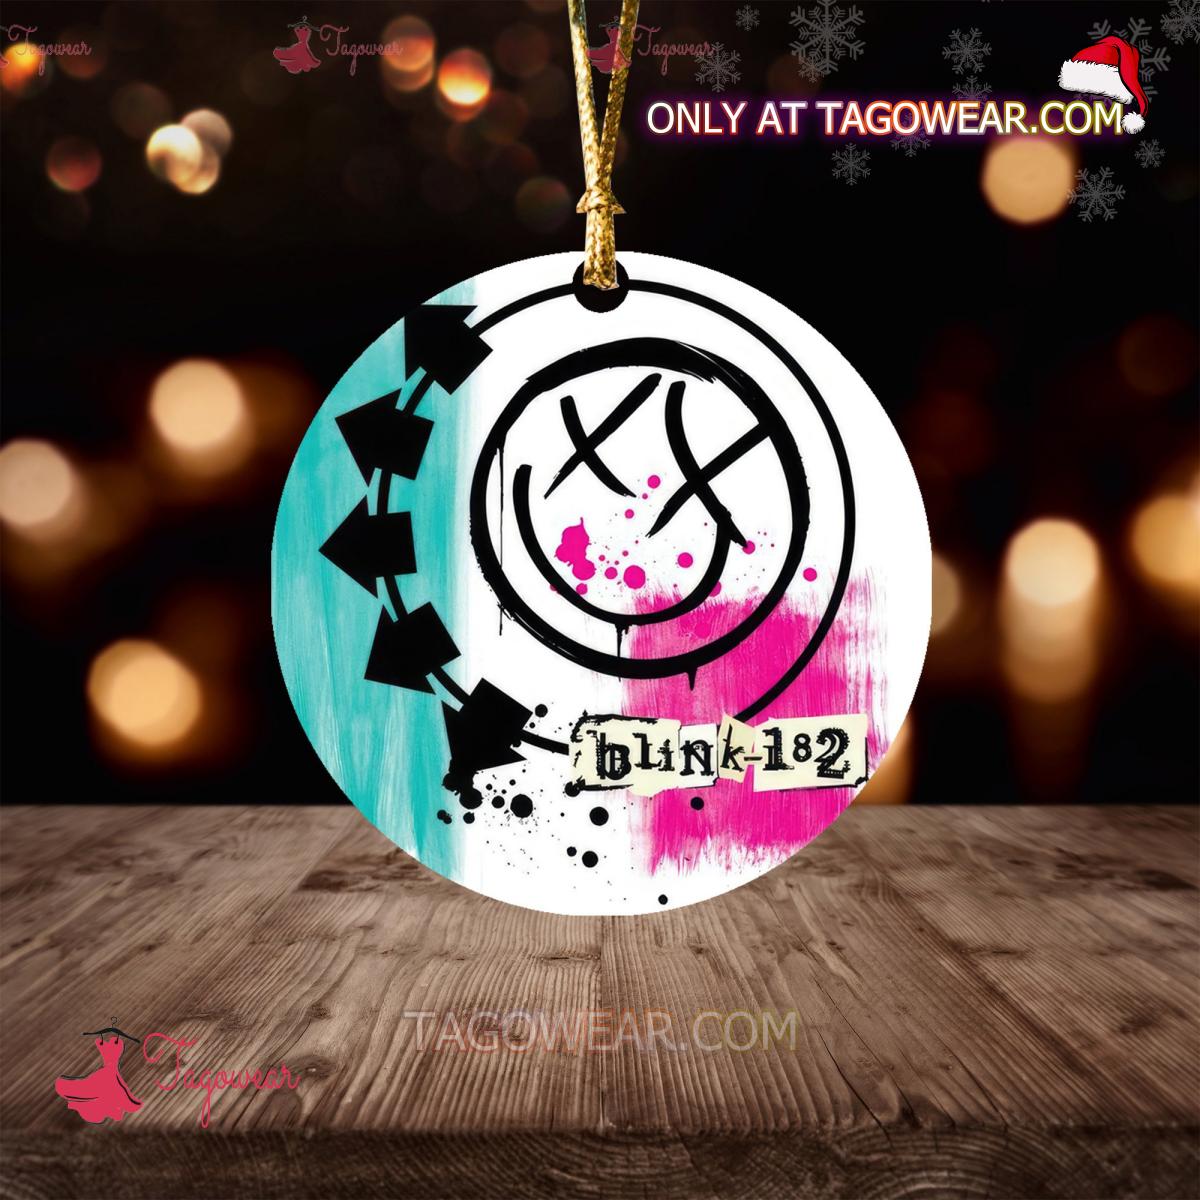 Blink-182 Self Titled Album Ornament